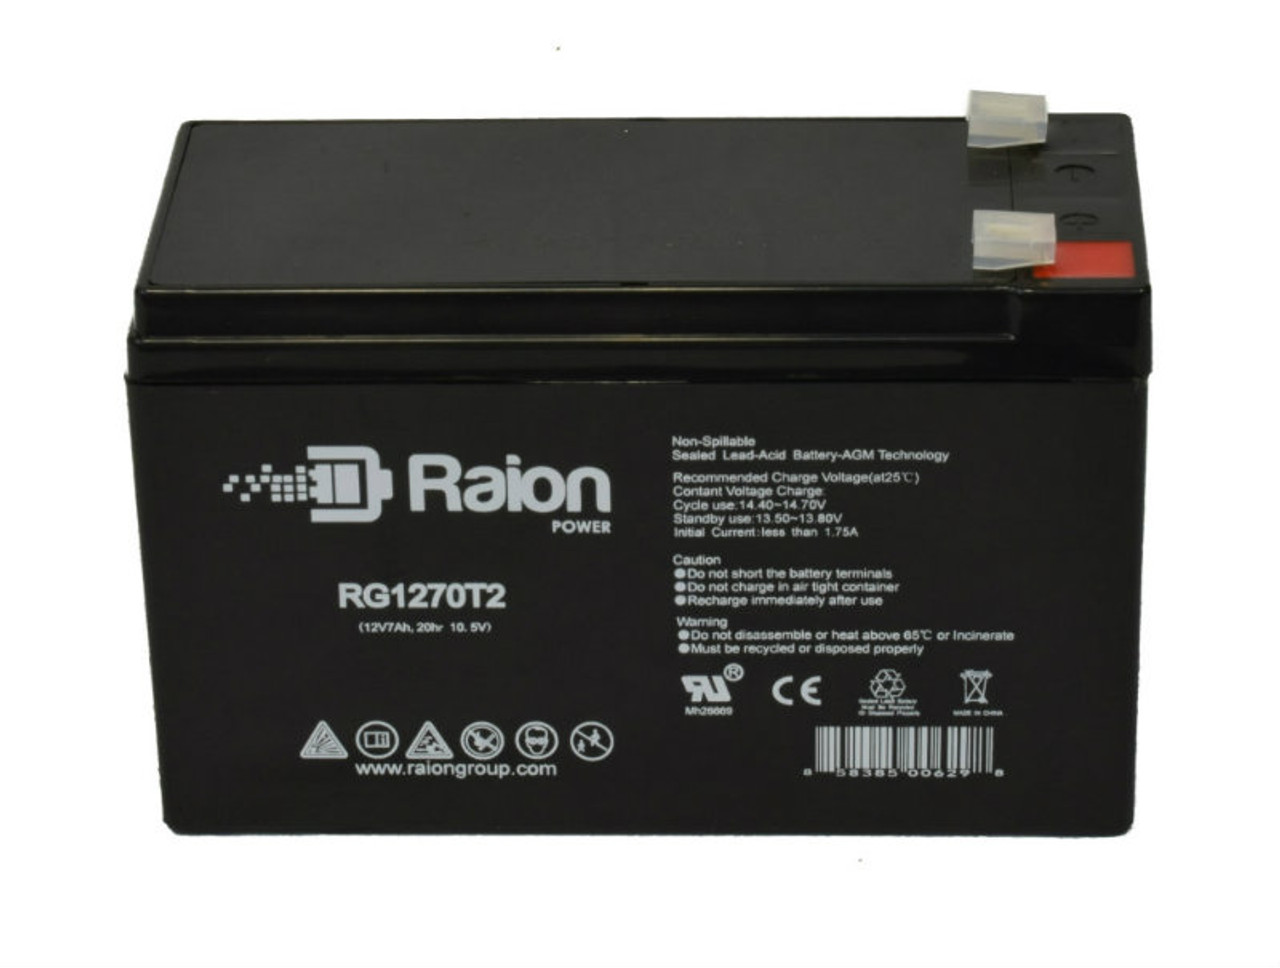 Raion Power RG1270T1 12V 7Ah Lead Acid Battery for Sentry Battery PM1270-F1